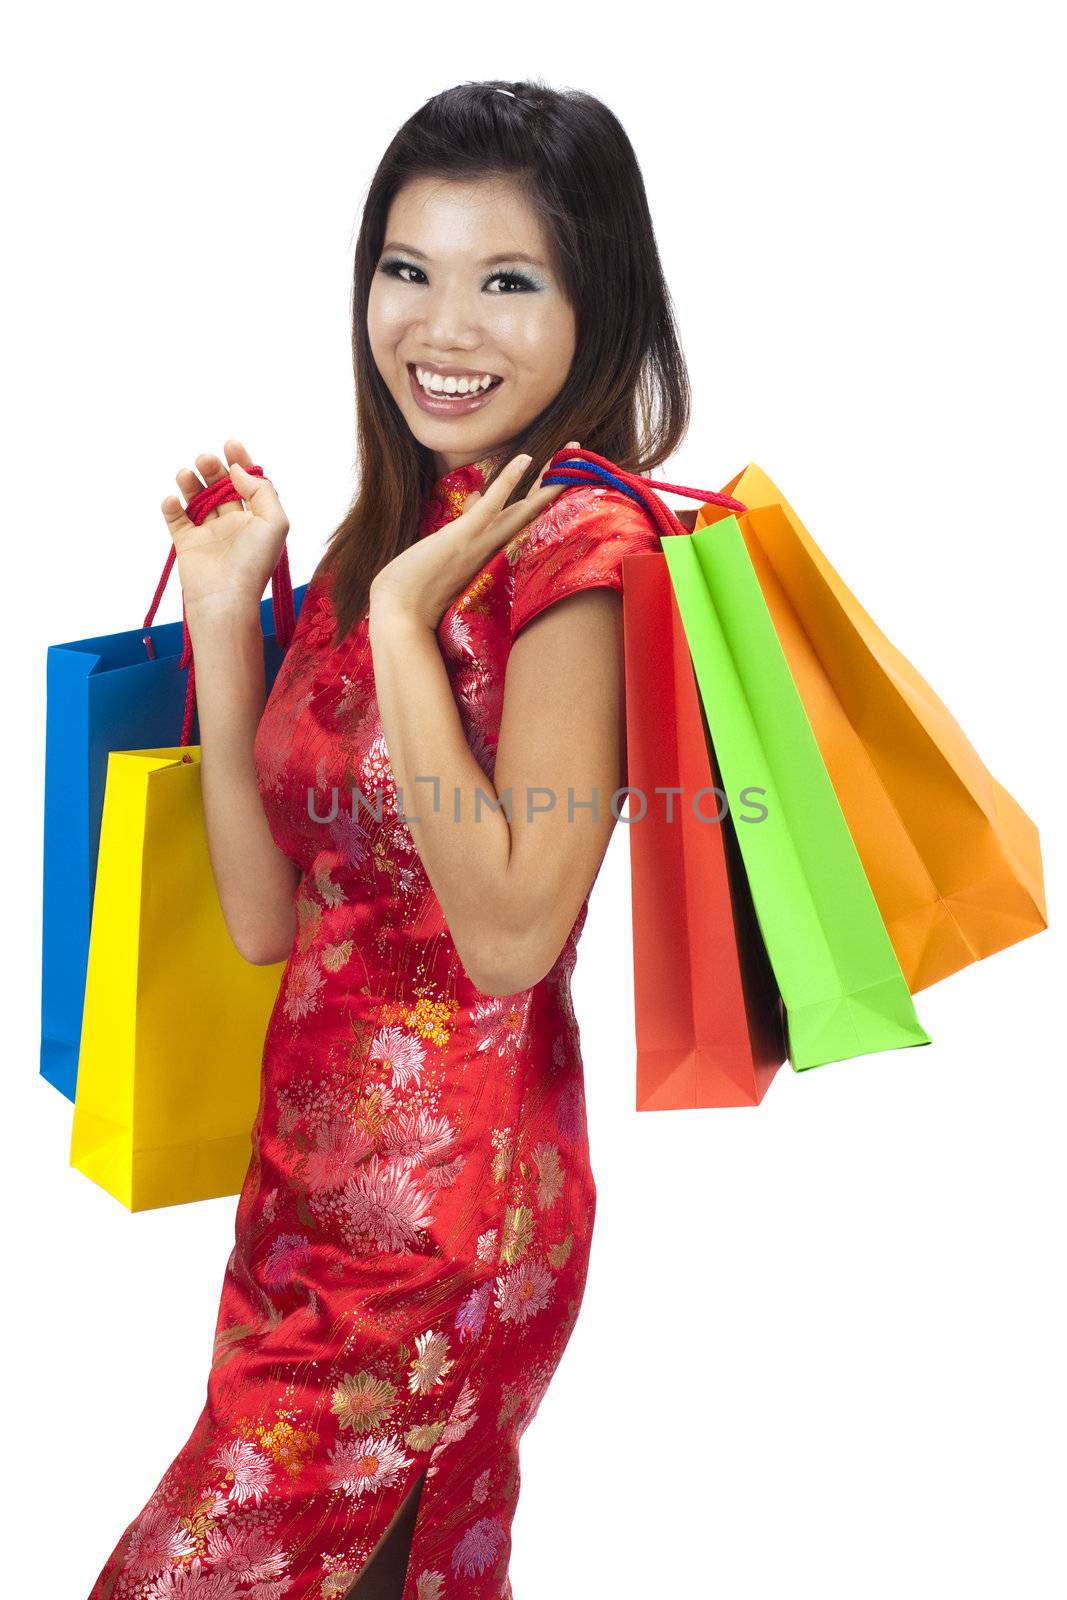 Asia shopping paradise by szefei